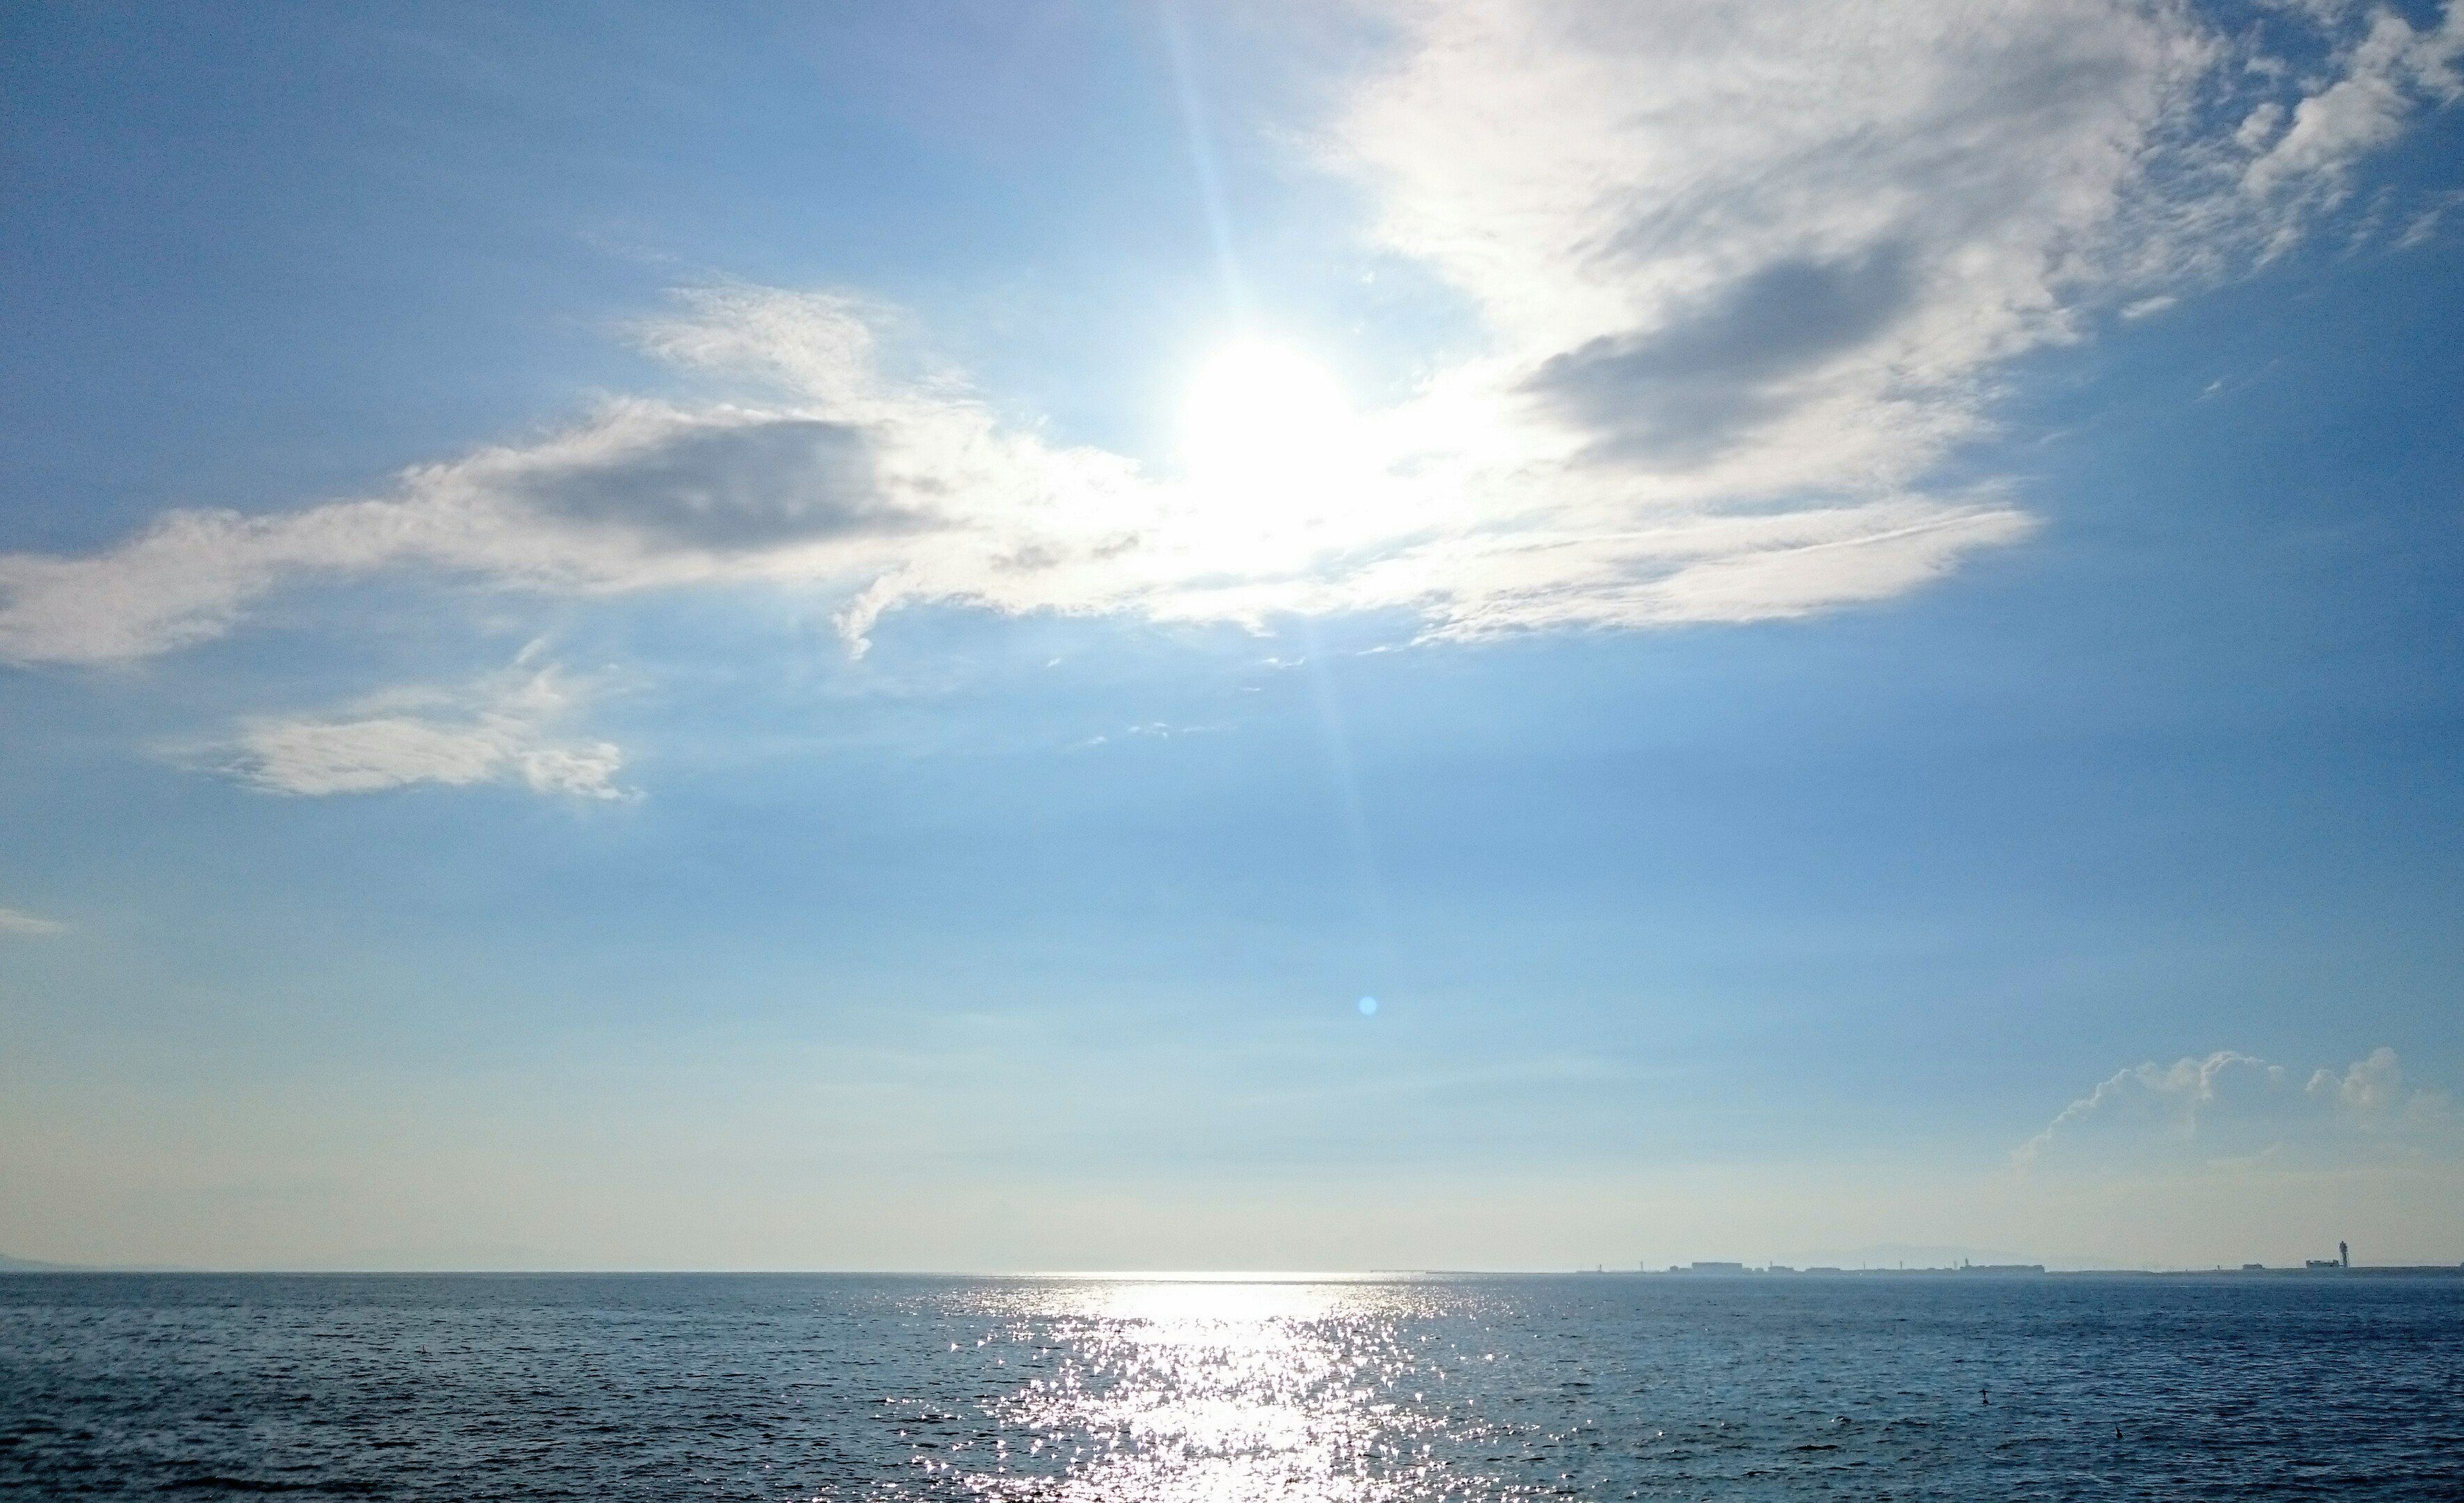 O Xrhsths Soleil Sto Twitter 雲の合間 太陽のひかり 照らされた水面 キラキラしてた 瞬間とか 永遠とか 思う 美しいと 思った 大阪 夏の午後の海 8月の青空 海が見える風景 夏空 りんくう 大阪湾 T Co Rnnkx4q8ma Twitter